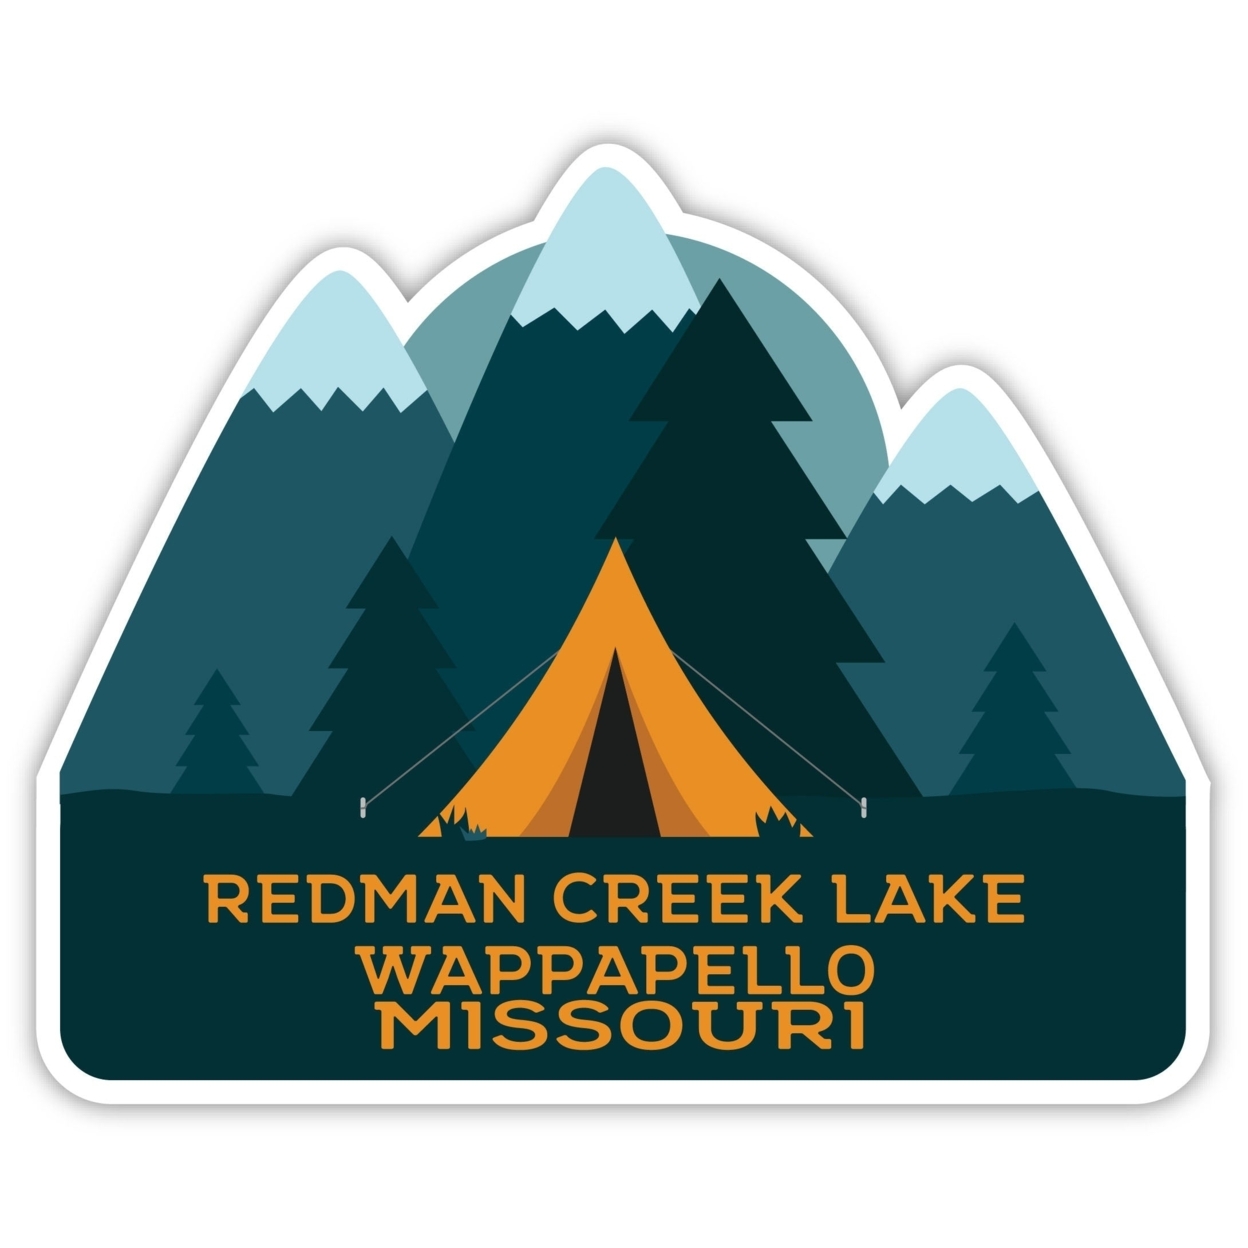 Redman Creek Lake Wappapello Missouri Souvenir Decorative Stickers (Choose Theme And Size) - Single Unit, 2-Inch, Tent